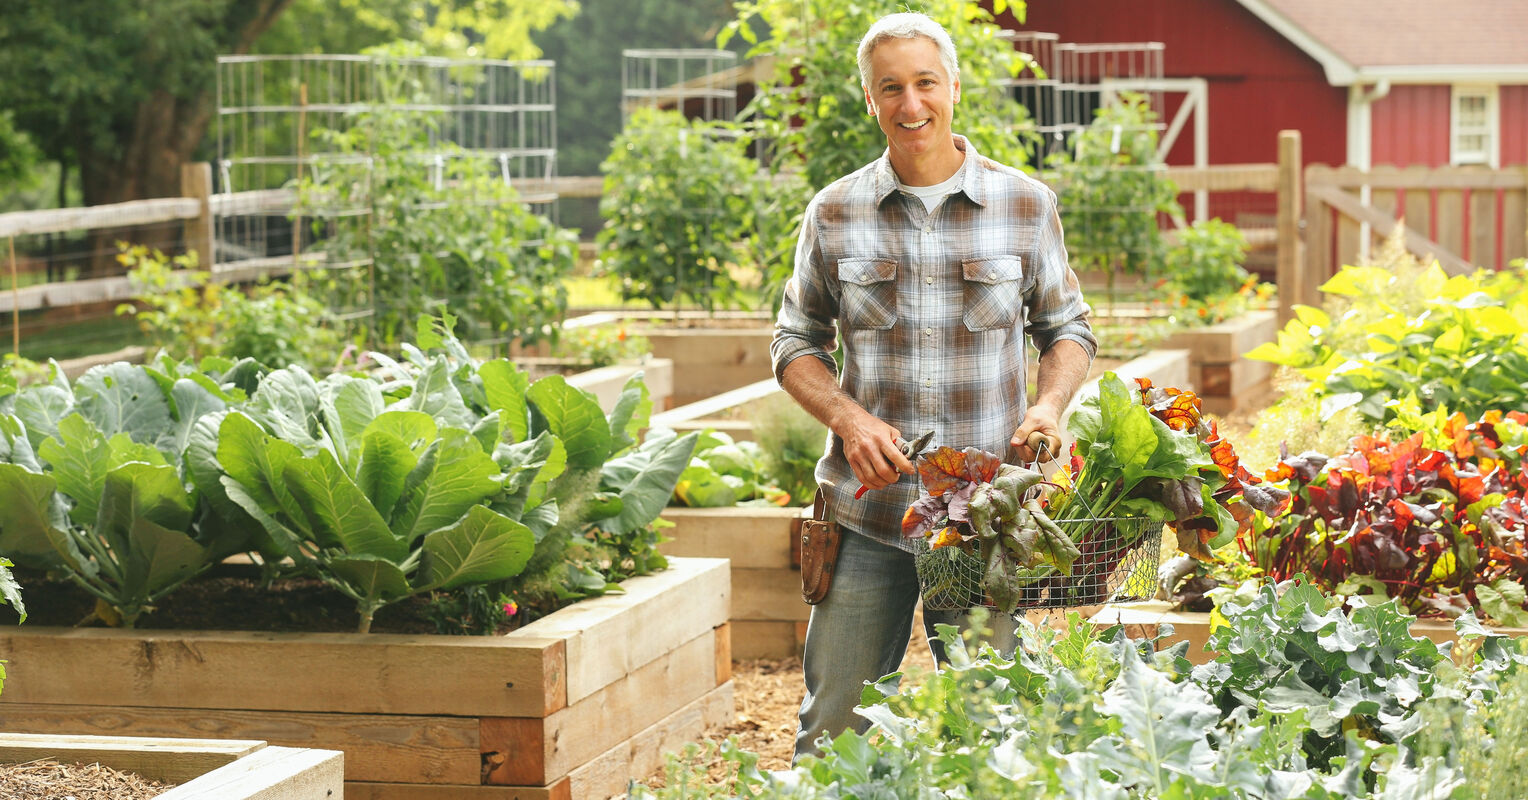 10 Mental Health Benefits of Gardening